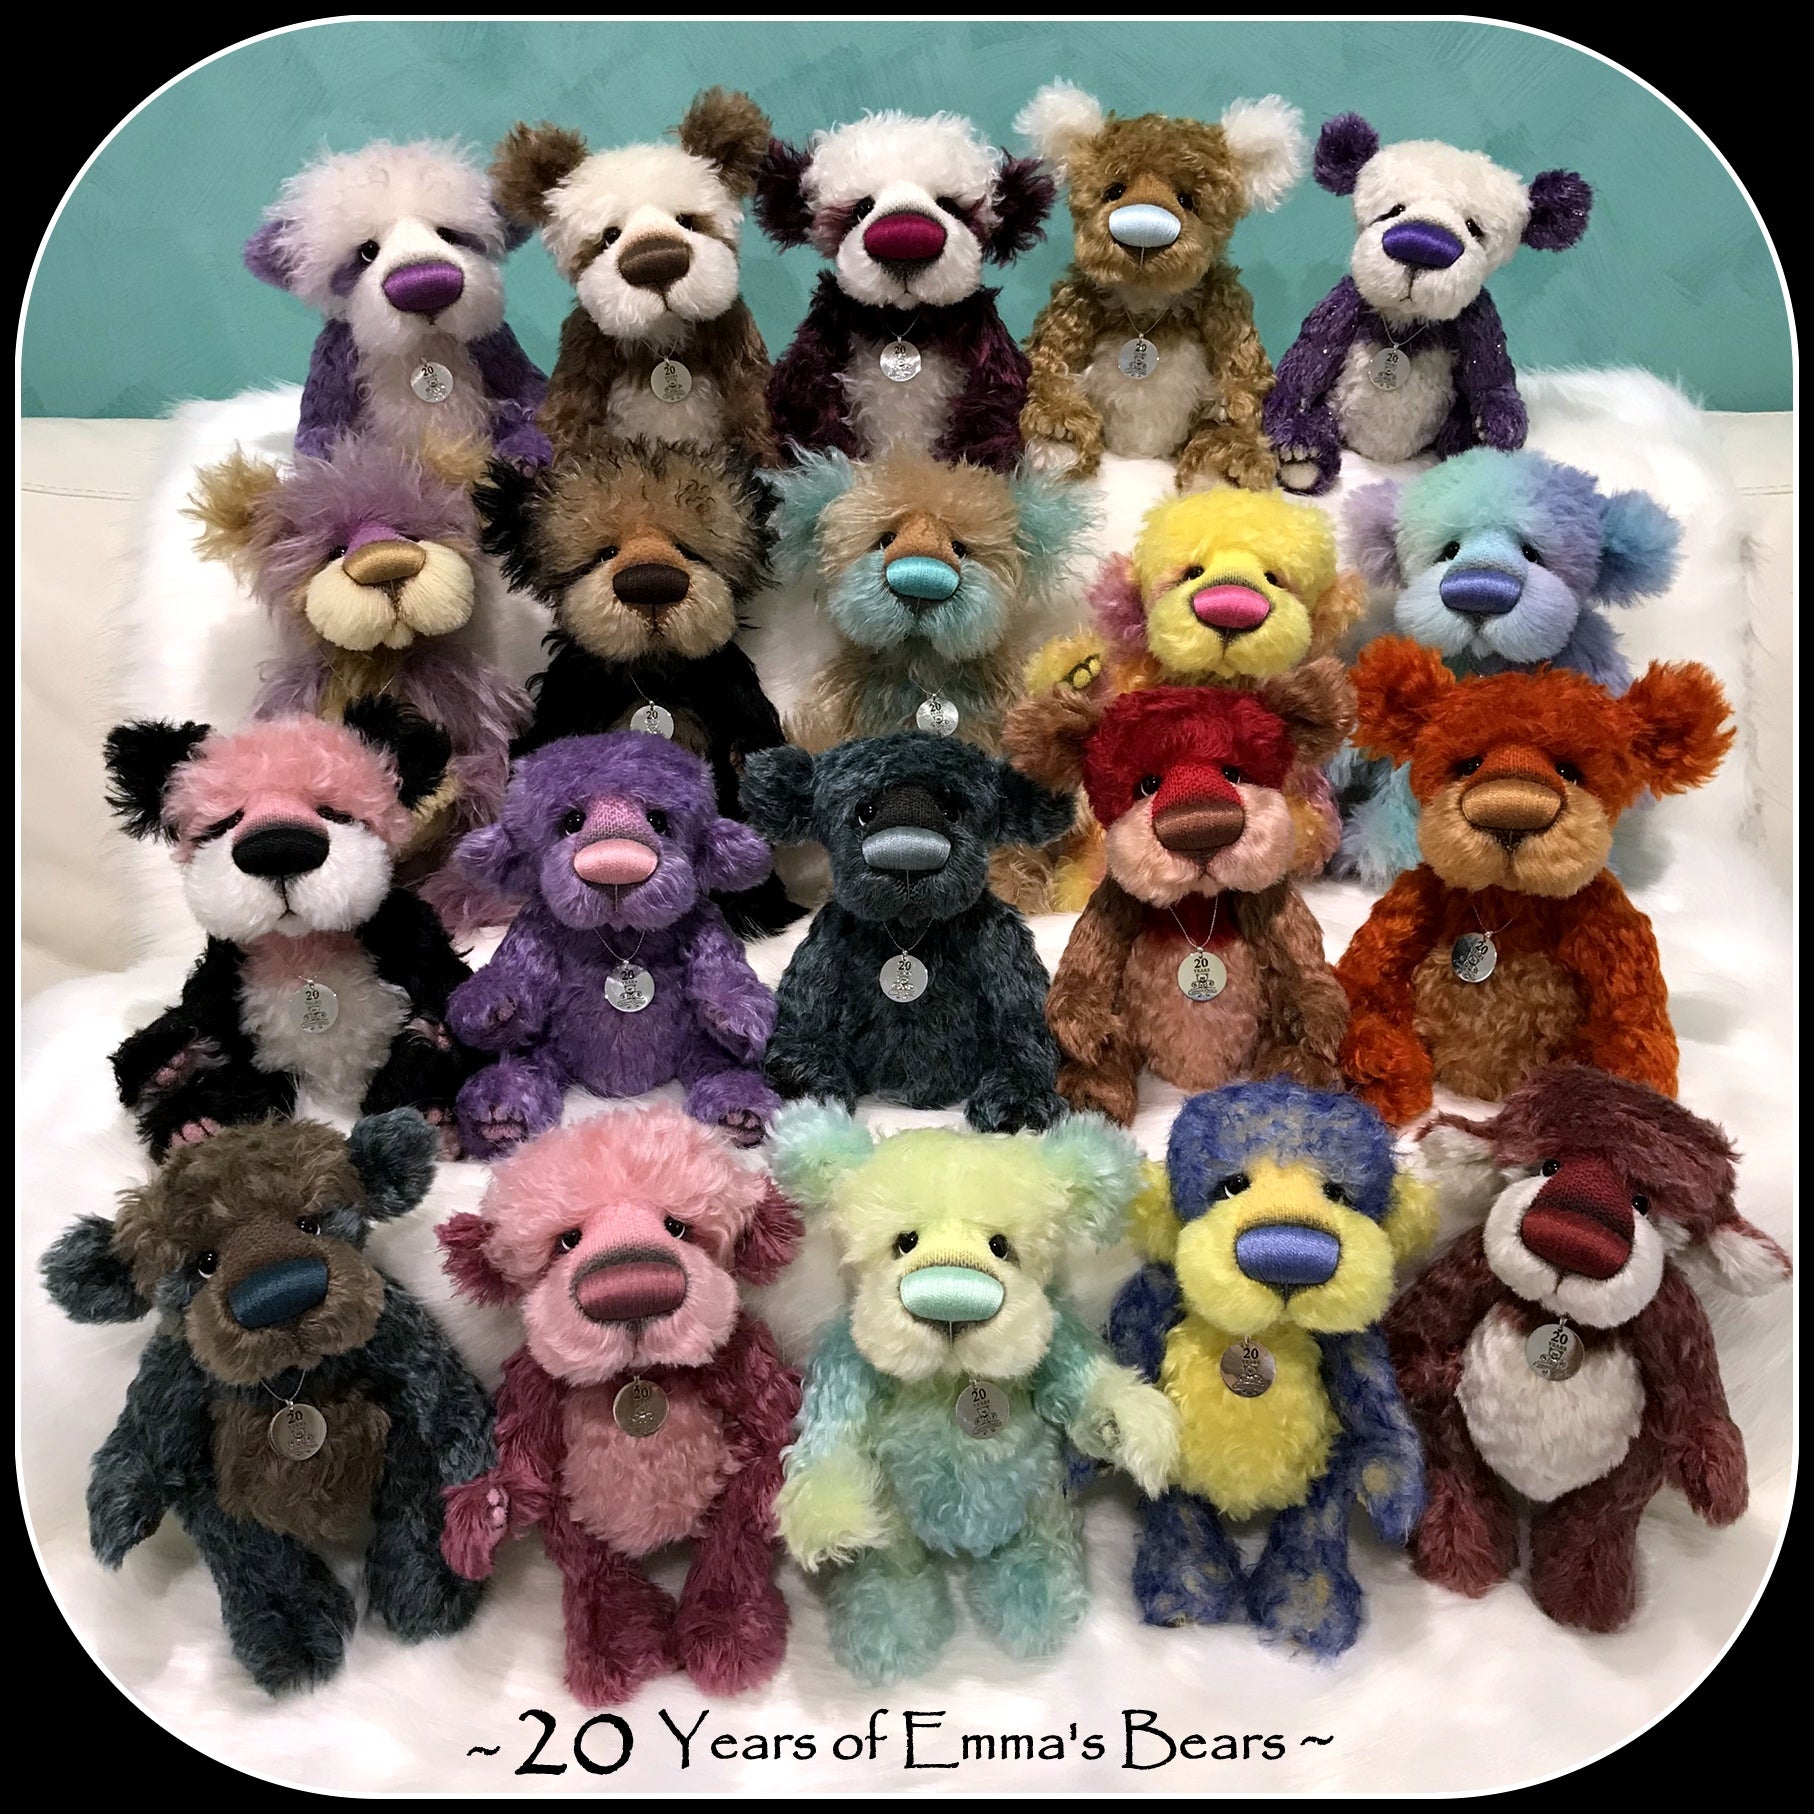 Picard - 20 Years of Emma's Bears Commemorative Teddy - OOAK in a series